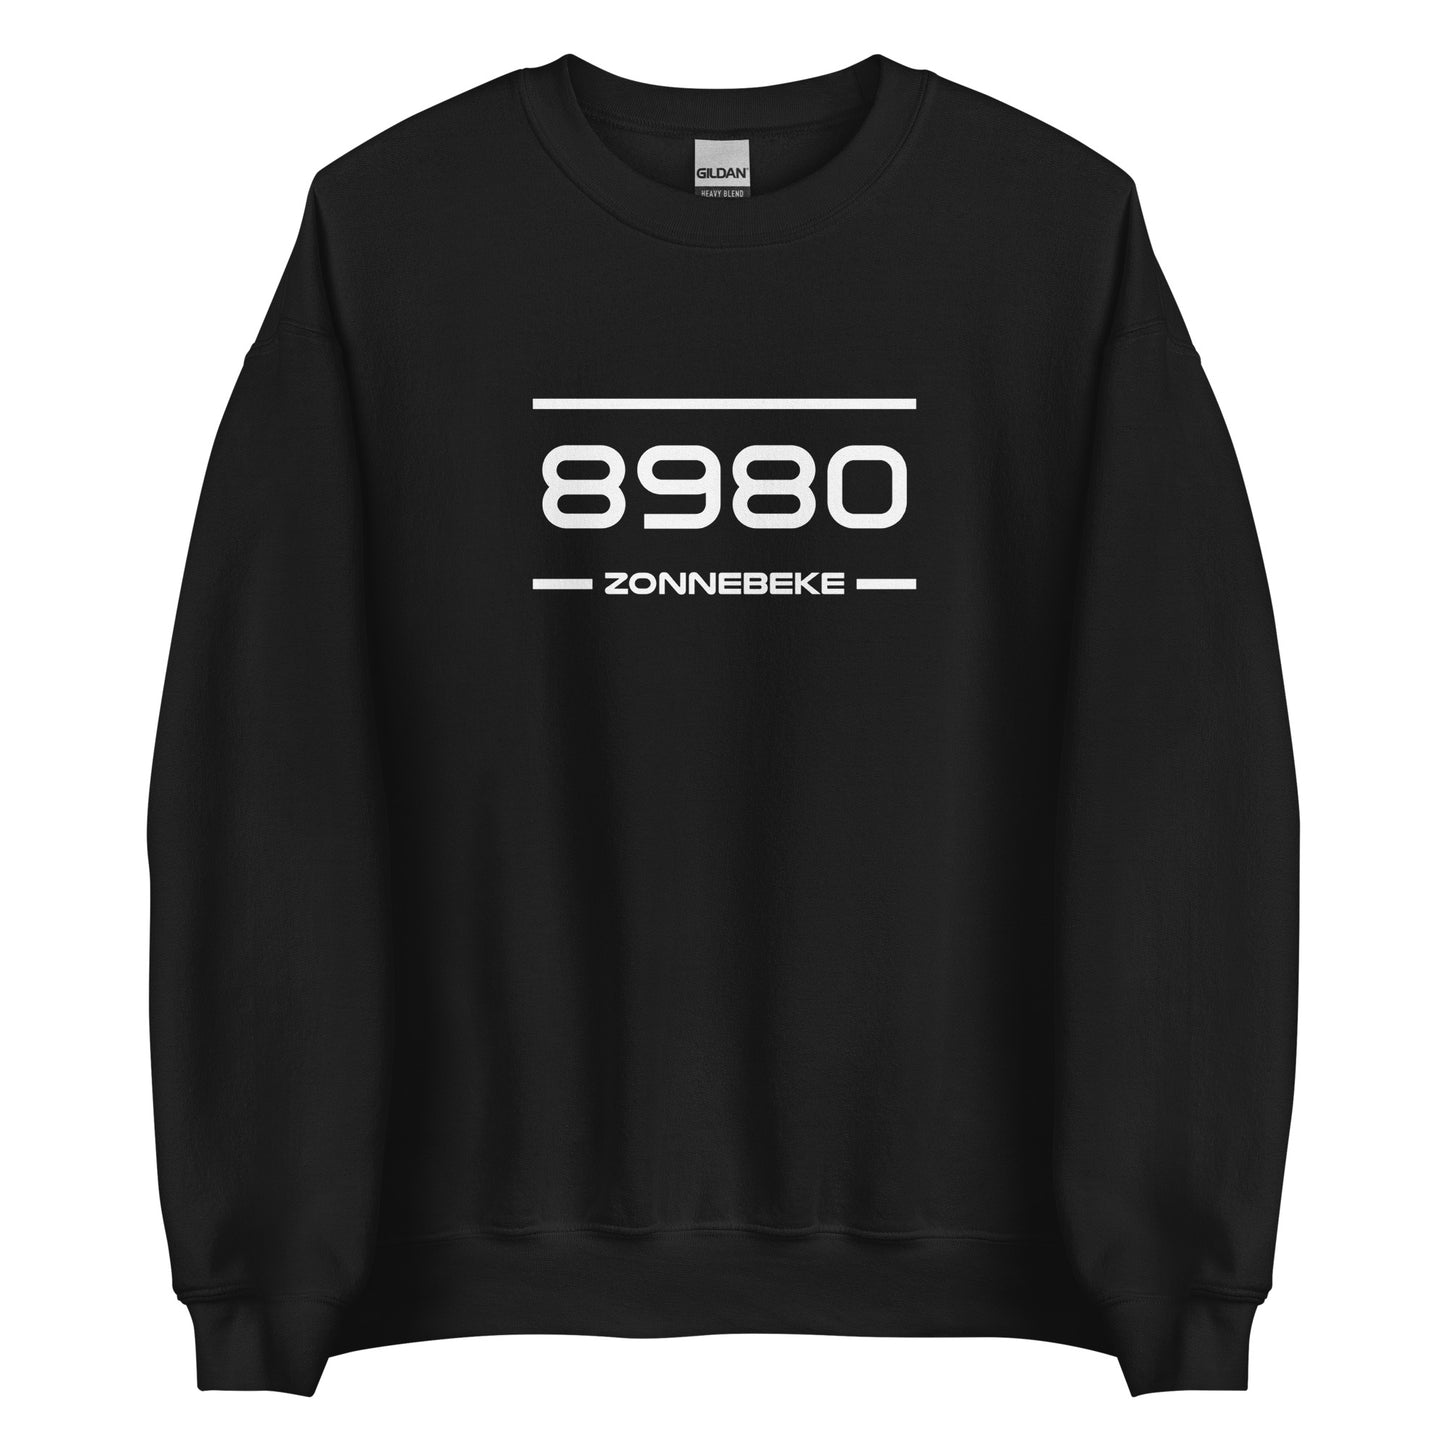 Sweater - 8980 - Zonnebeke (M/V)